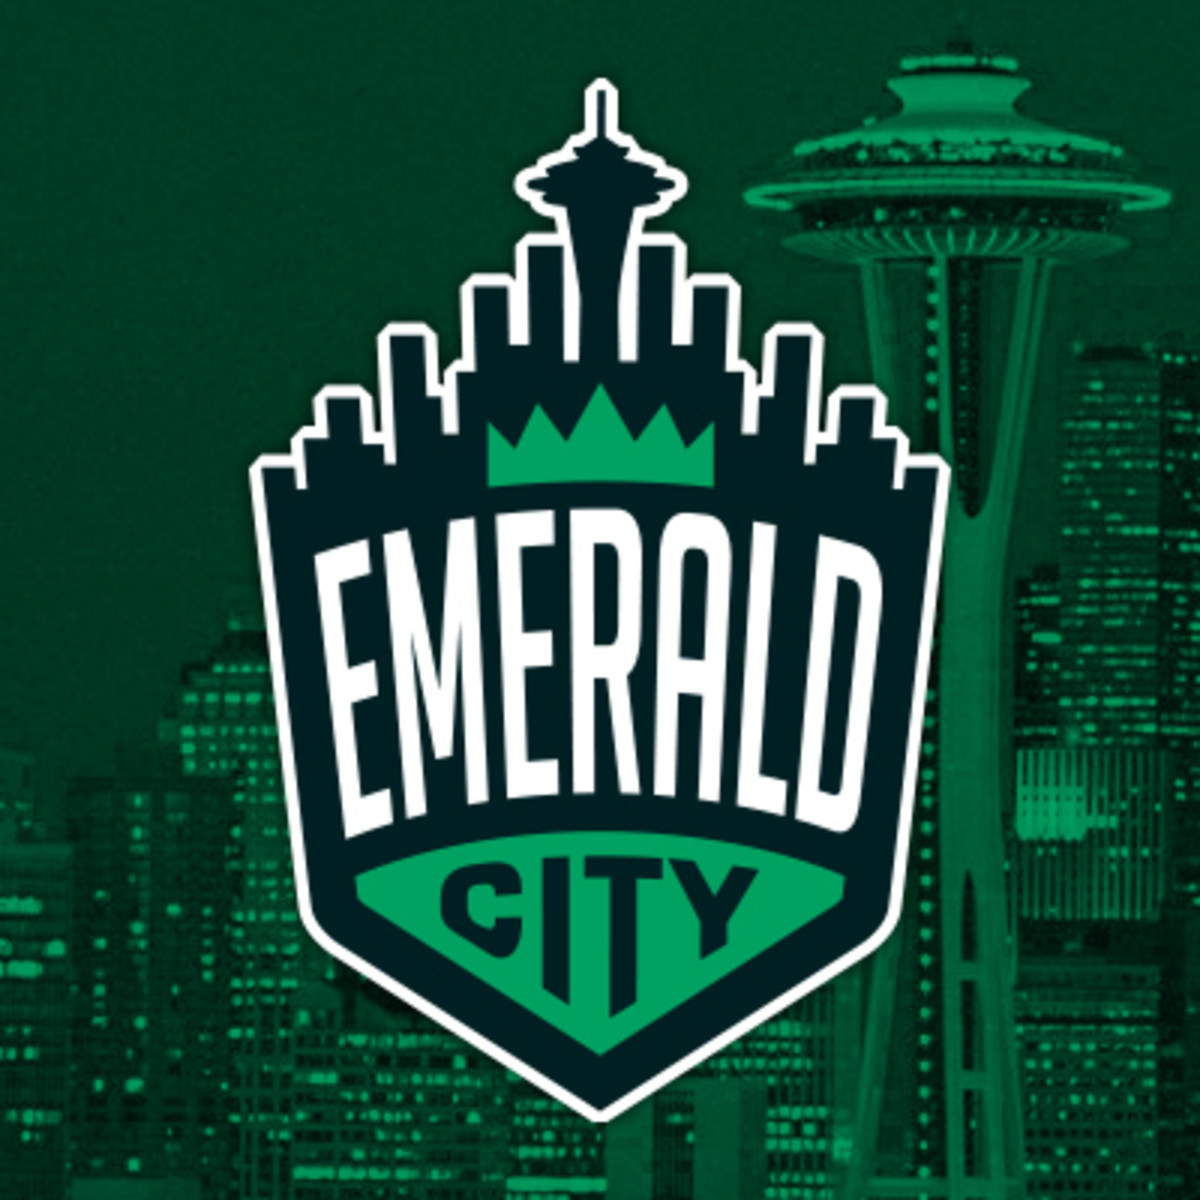 emeraldcity1.jpg